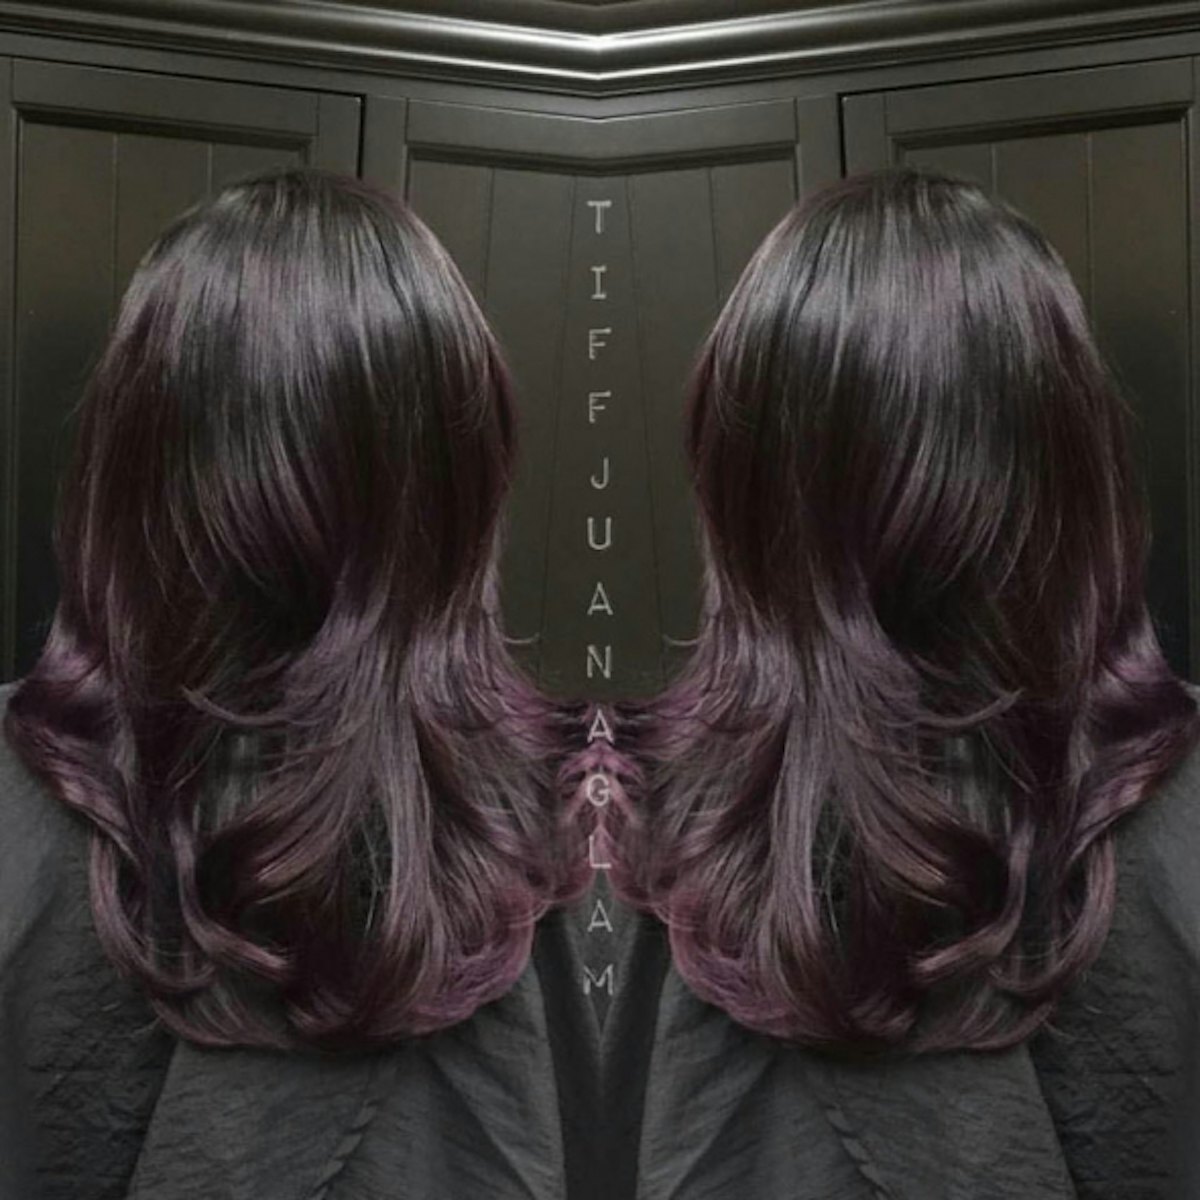 Hair Color How To: Black Cherry by Tiffany Galaviz | Beauty Launchpad